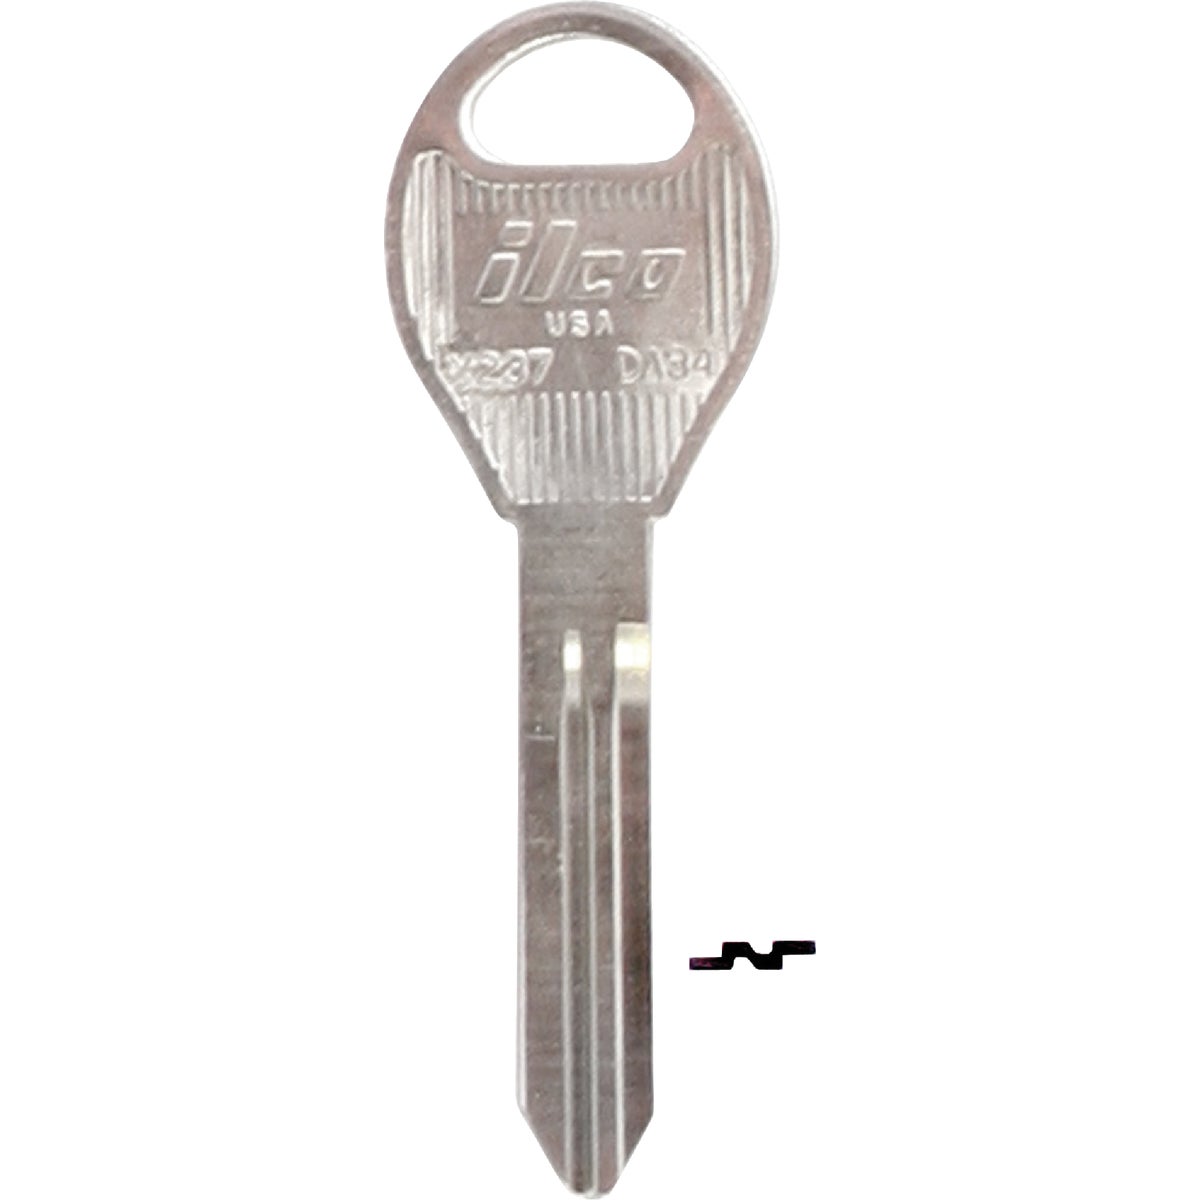 ILCO Nissan Nickel Plated Automotive Key, DA34 / X237 (10-Pack)